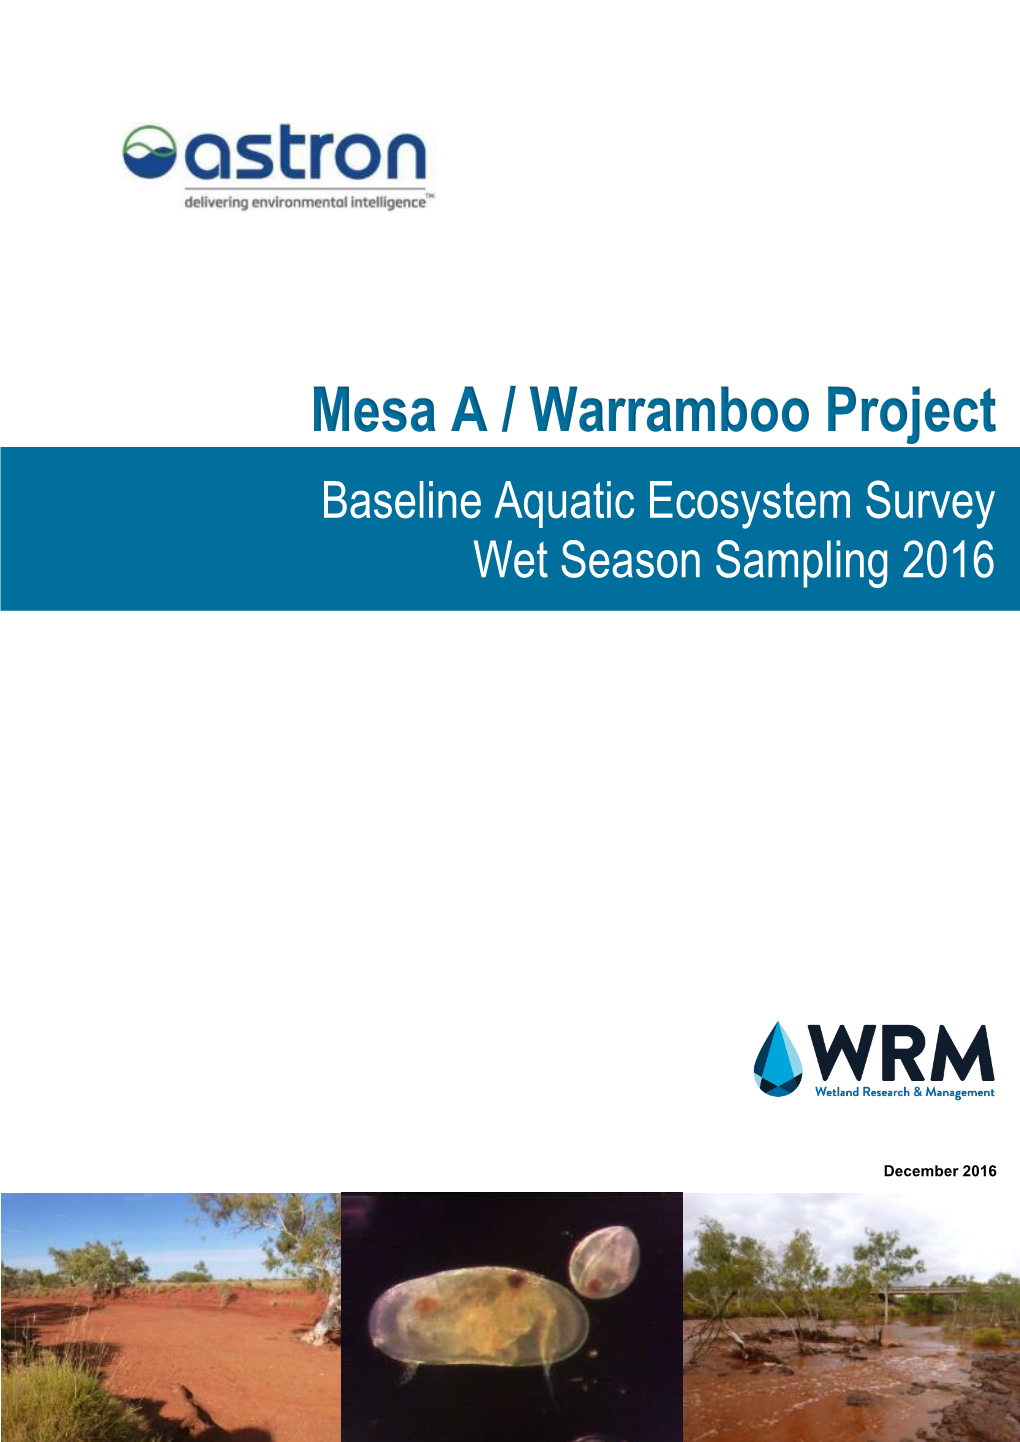 A8 Baseline Aquatic Ecosystem Survey Wet Season (WRM 2016)